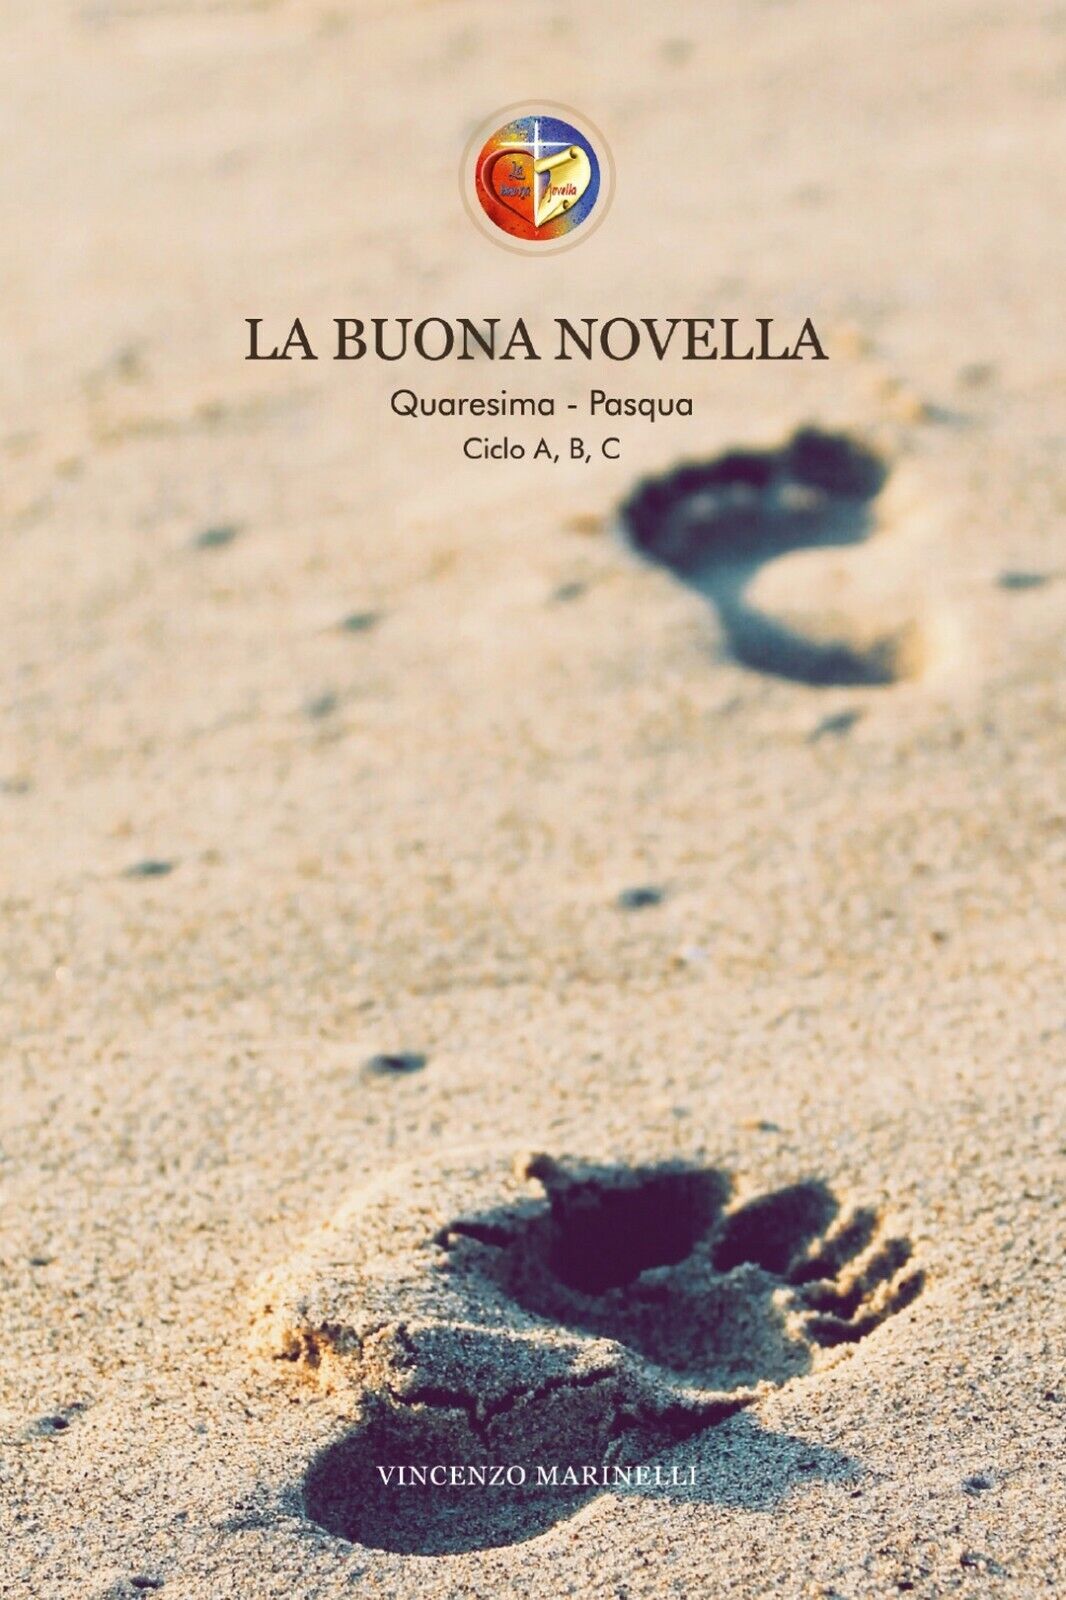  La Buona Novella. Quaresima e Pasqua, Vincenzo Marinelli,  2020,  Youcanprint